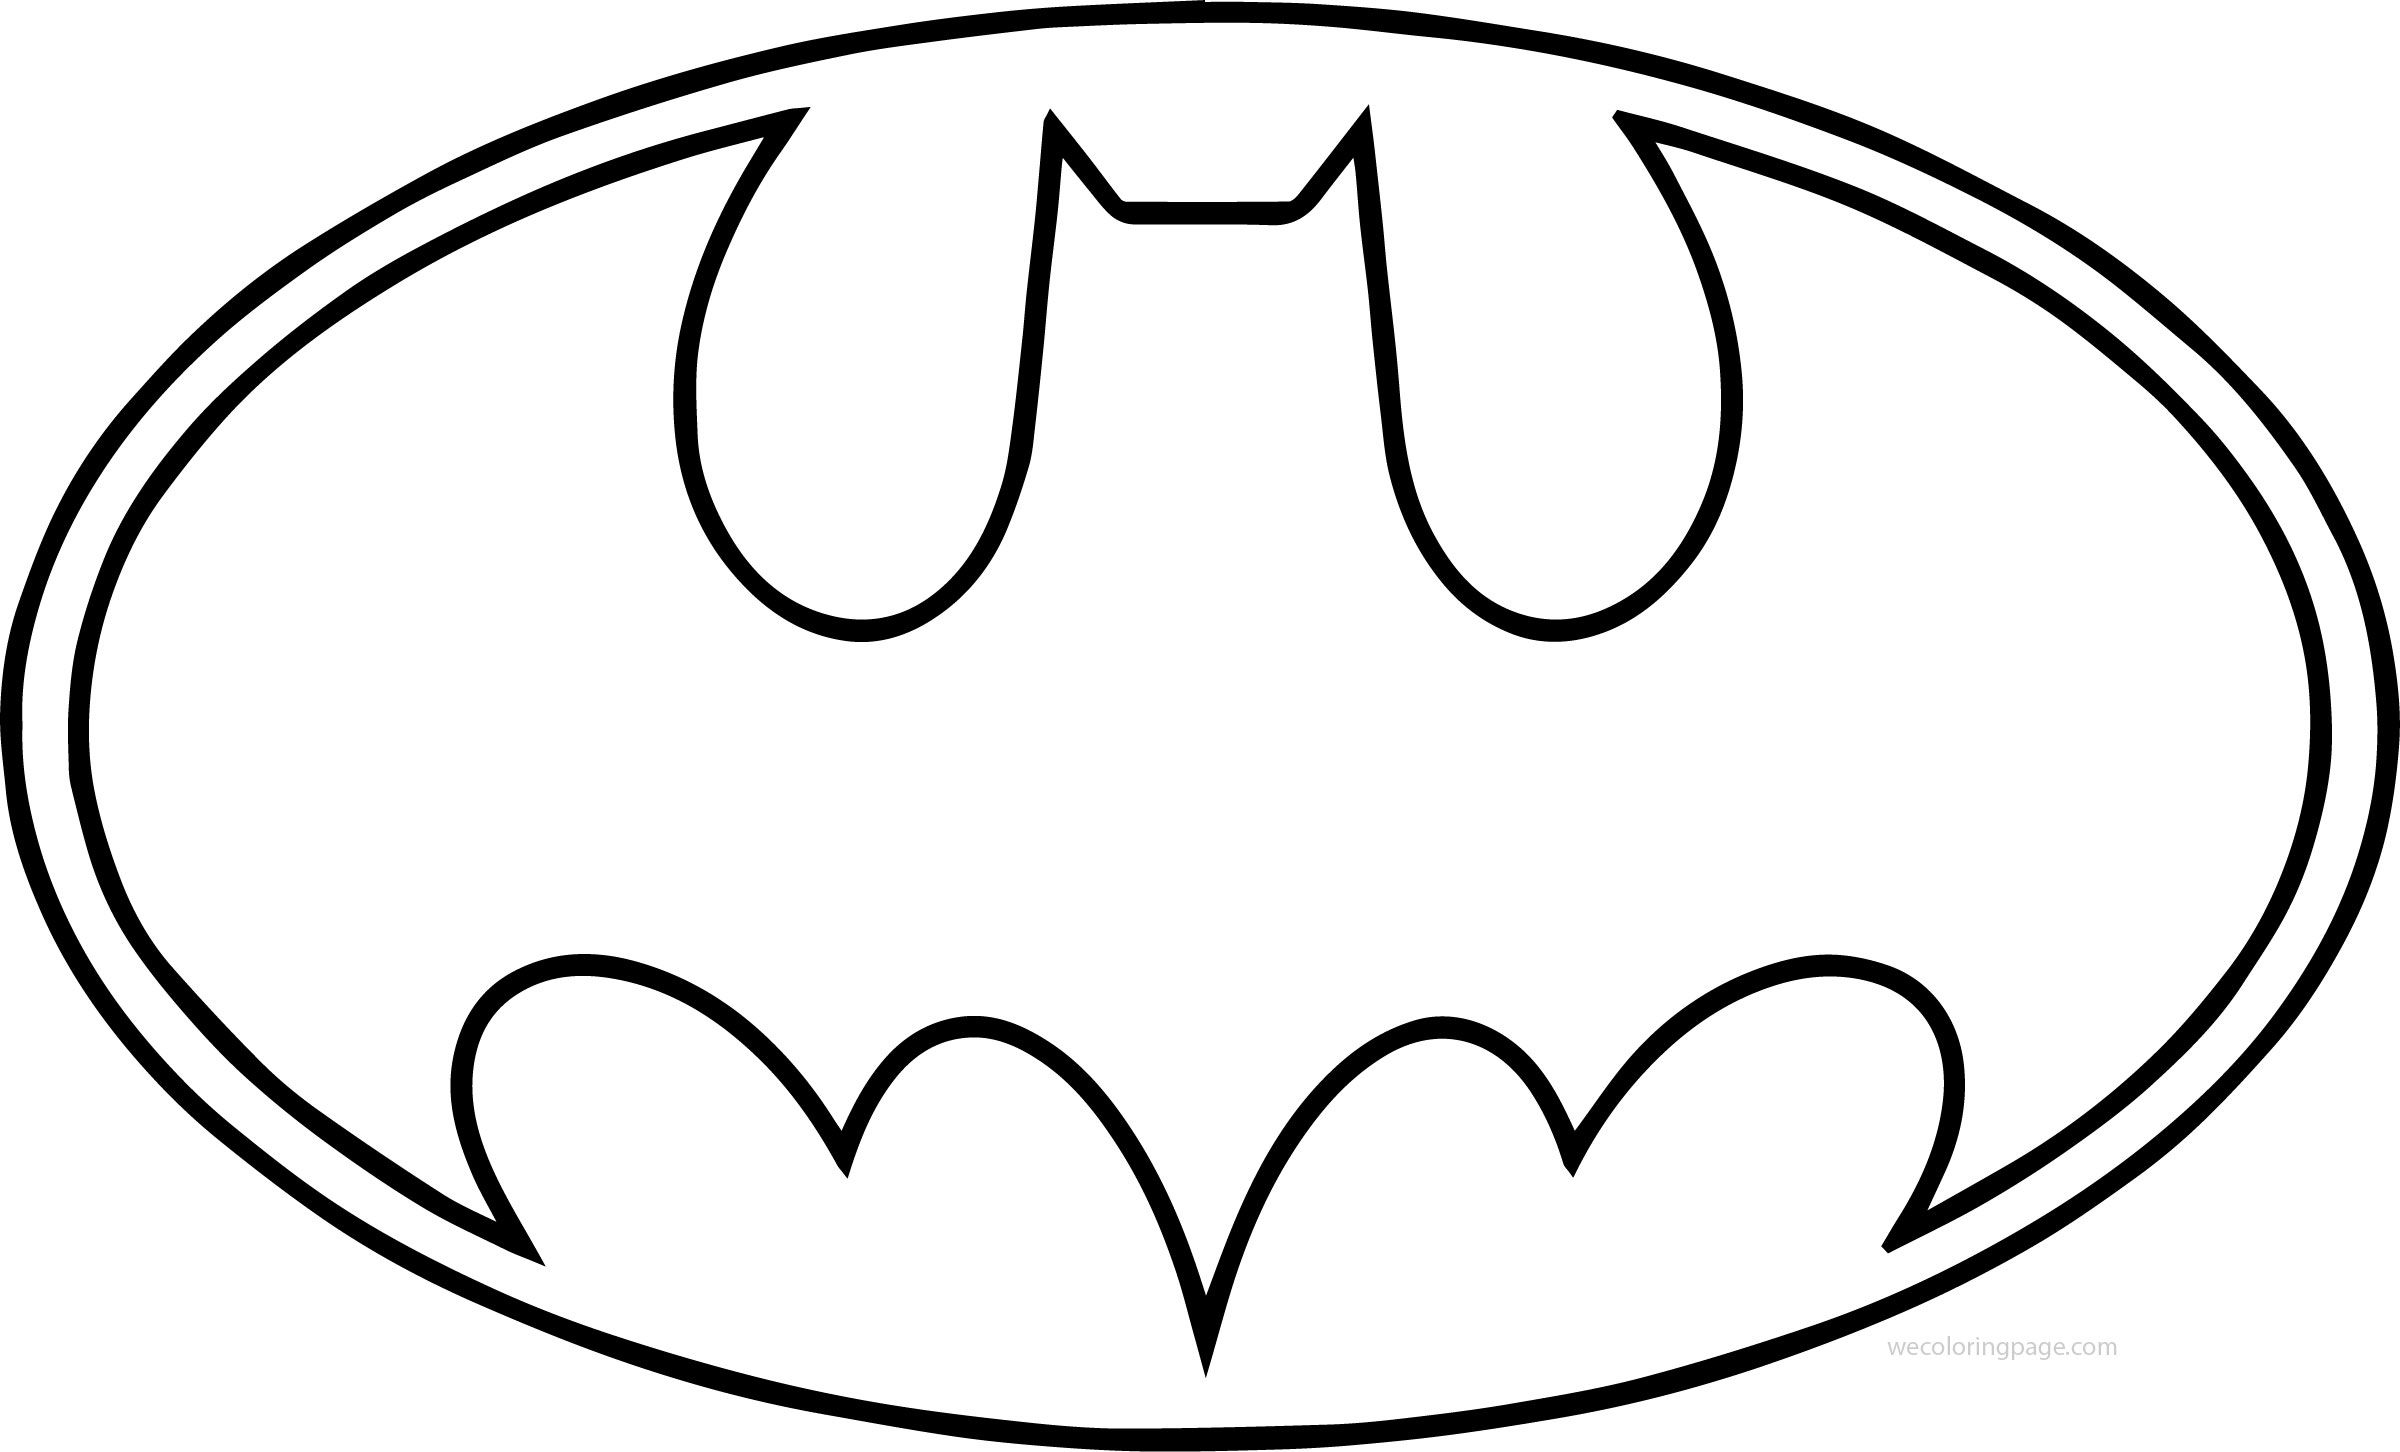 Outline Batman Logo Coloring Page | Wecoloringpage